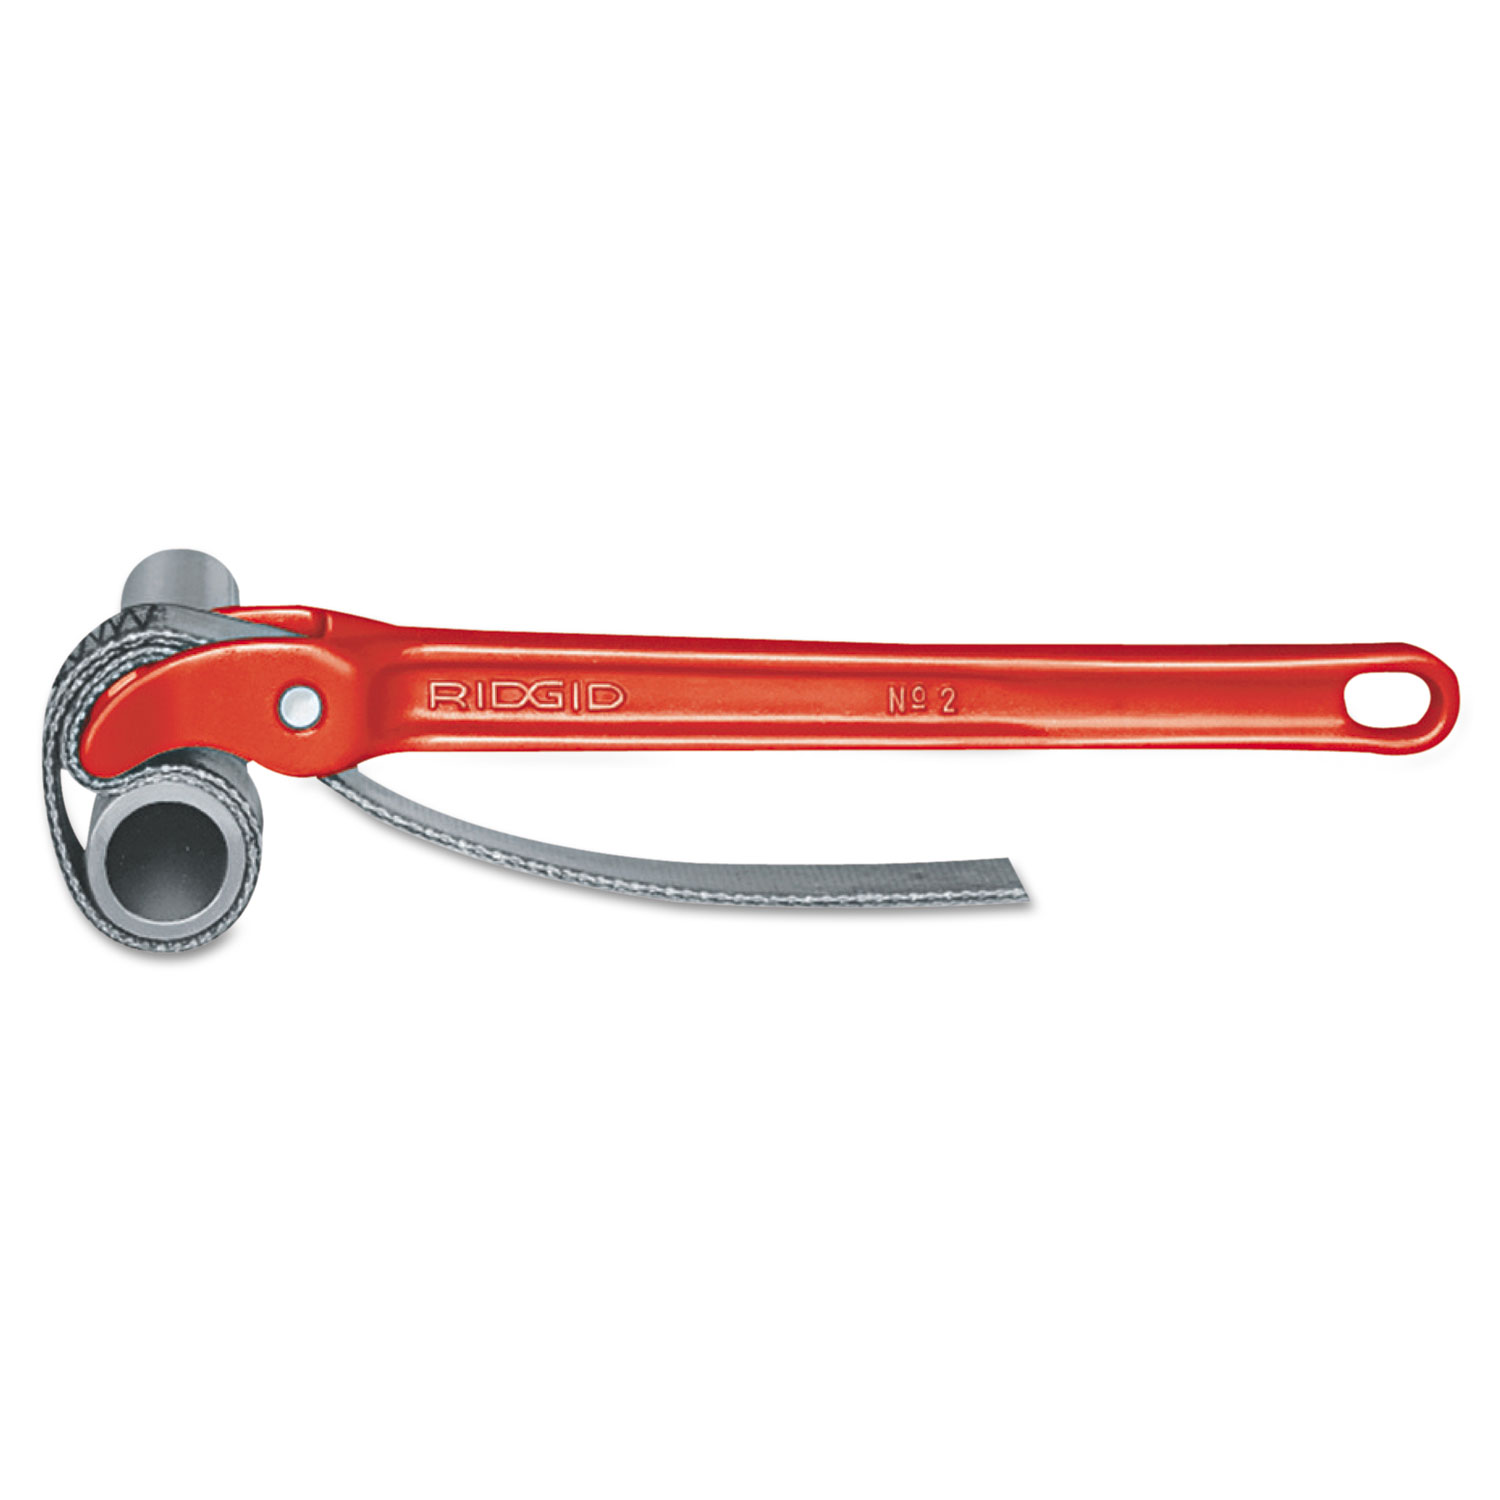 RIDGID Strap Wrench, 18 Long, 29 1/4 x 1 3/4 Strap, 7 Capacity